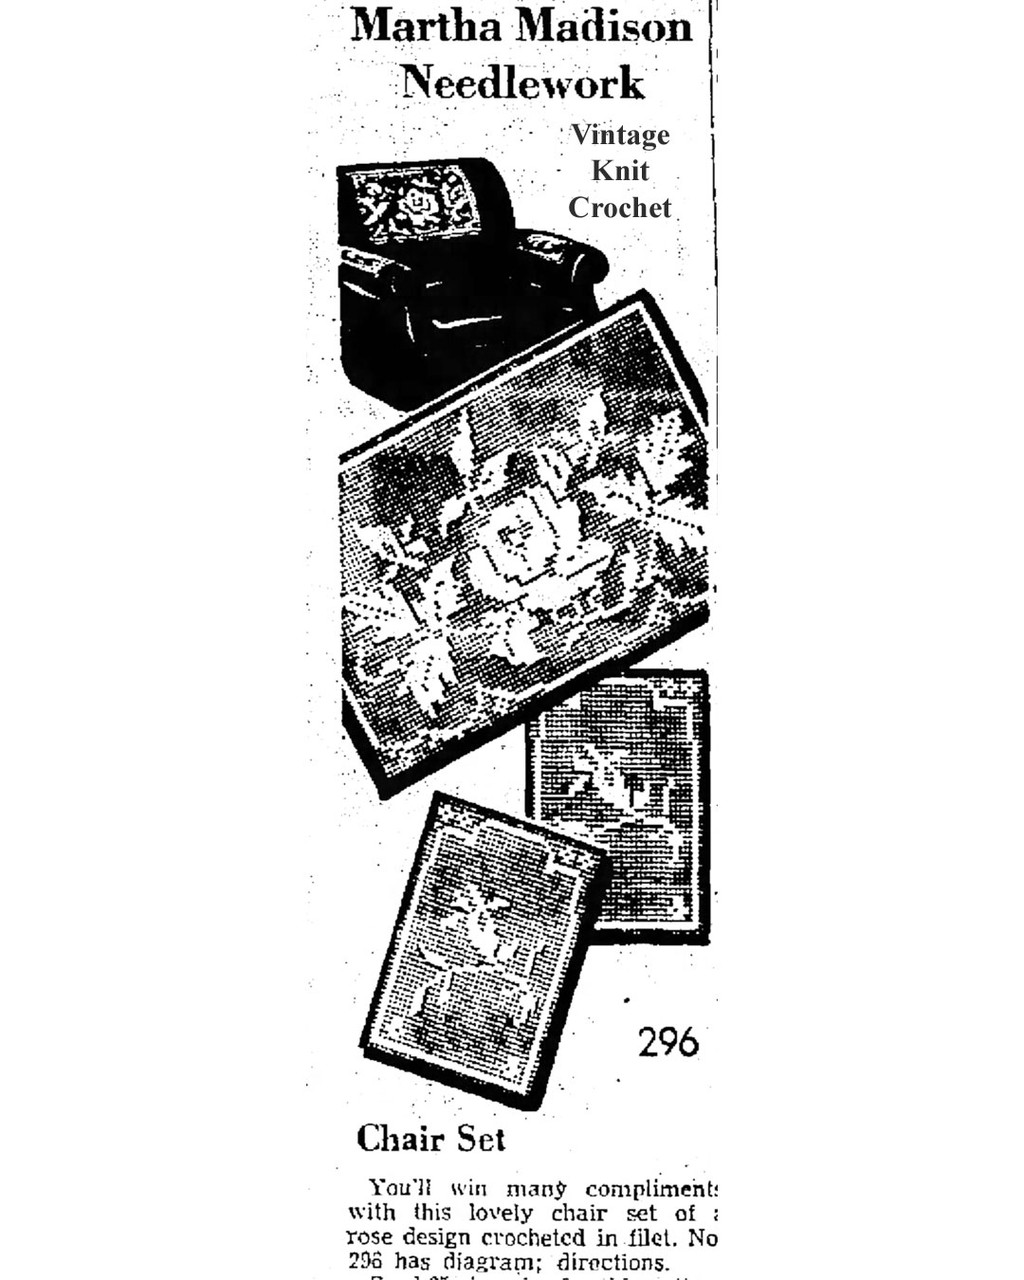 Mail Order Pattern 296, Filet Crochet Rose Chair Set Newspaper Advertisement 